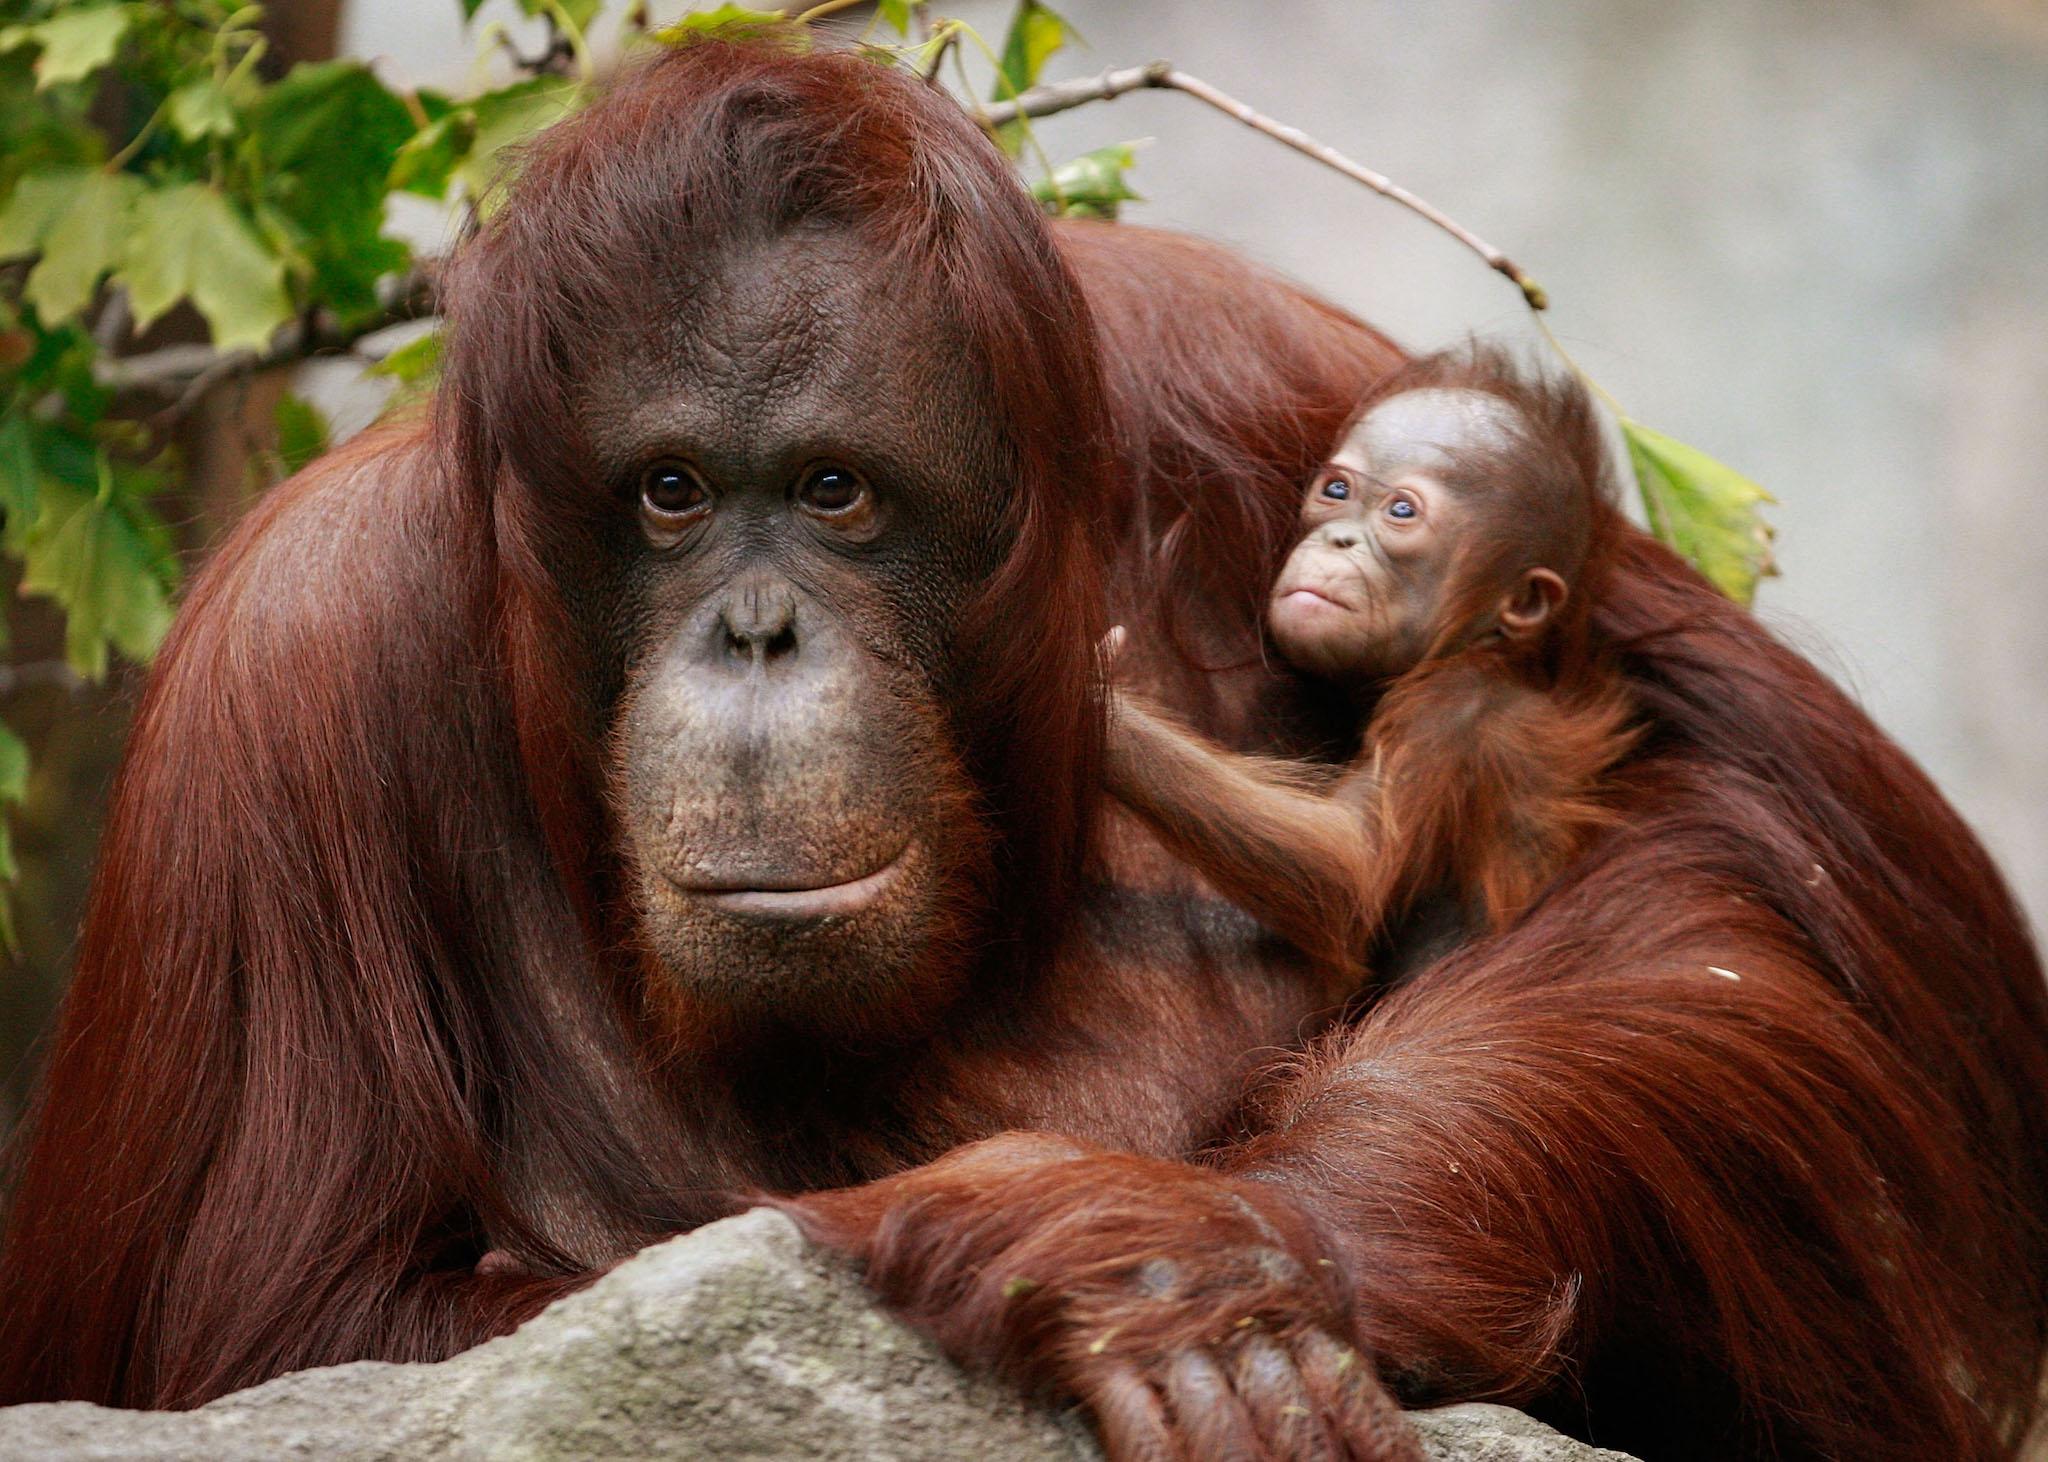 Sophia, a twenty-seven-year-old Bornean orangutan, holds her newborn in her enclosure at Brookfield Zoo October 23, 2008 in Brookfield, Illinois